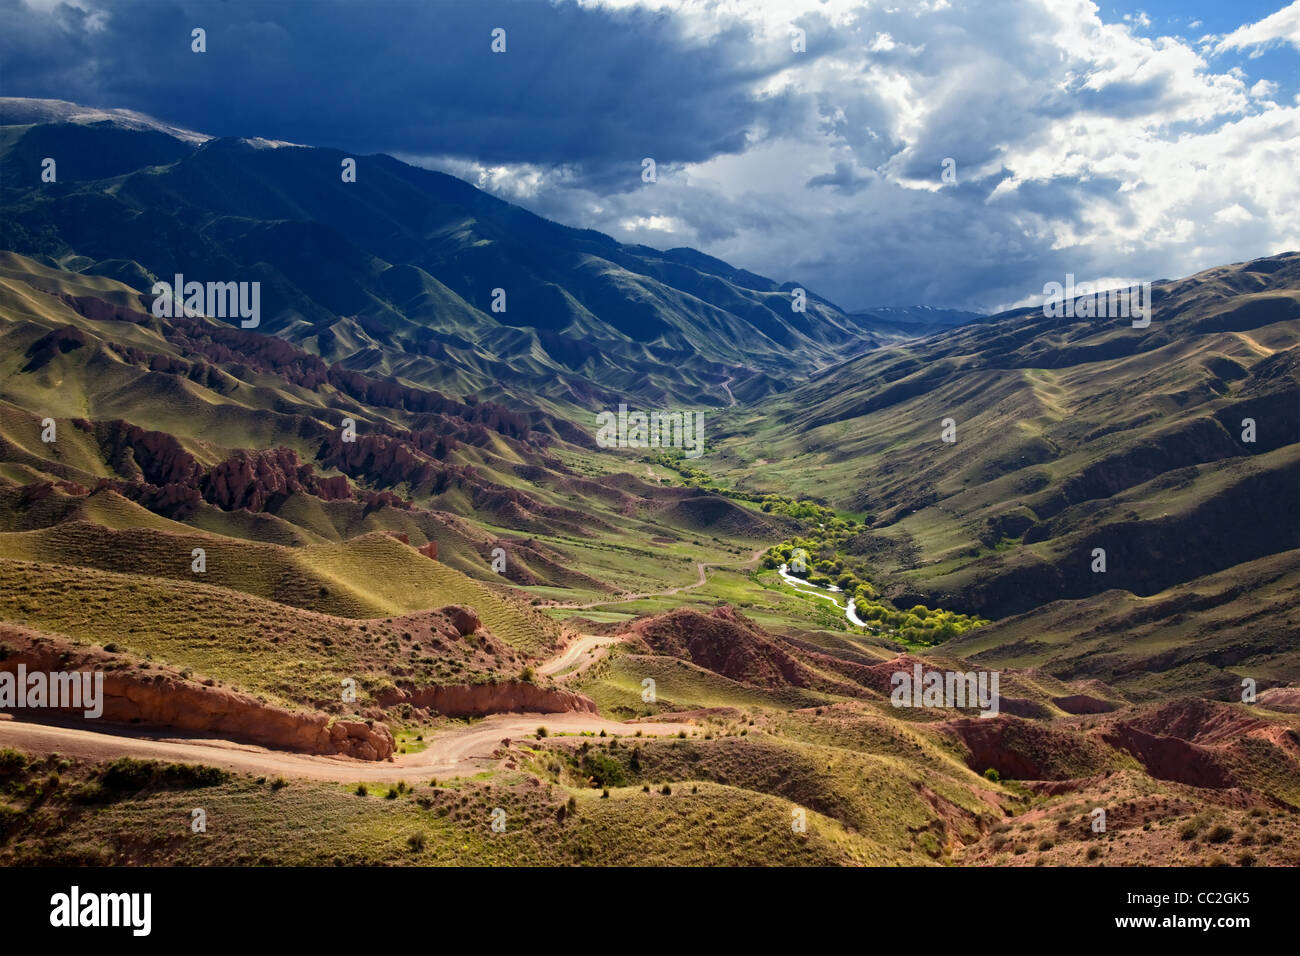 Oasis in desert mountains on Assy plateau, Tien-Shan mountain, Kazakstan Stock Photo